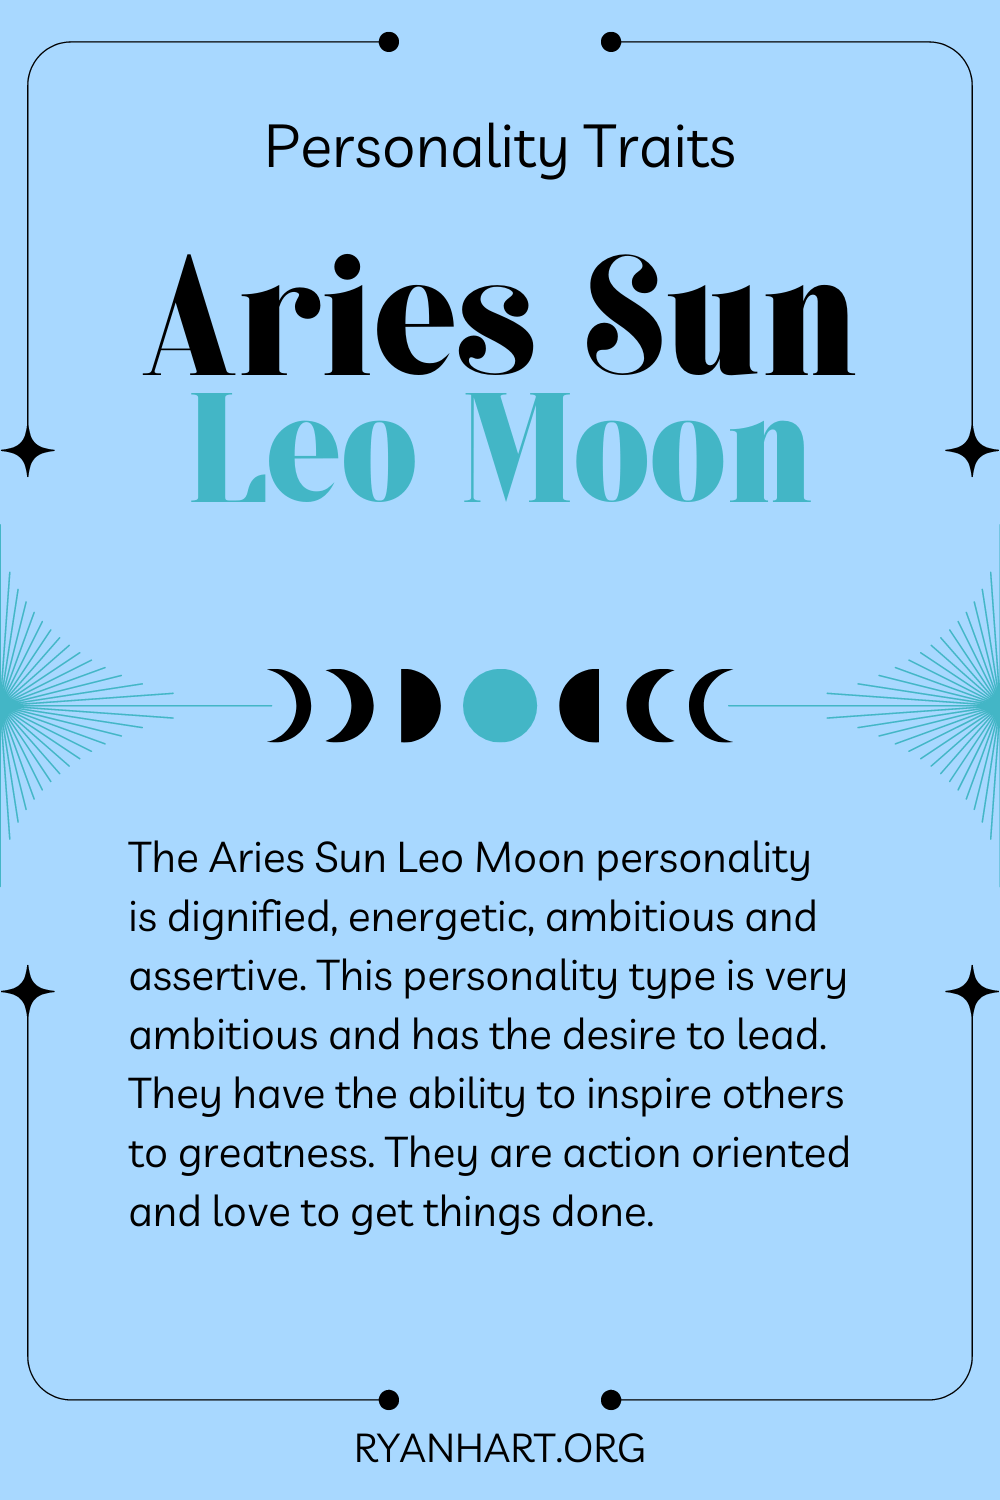 Aries Sun Leo Moon Description